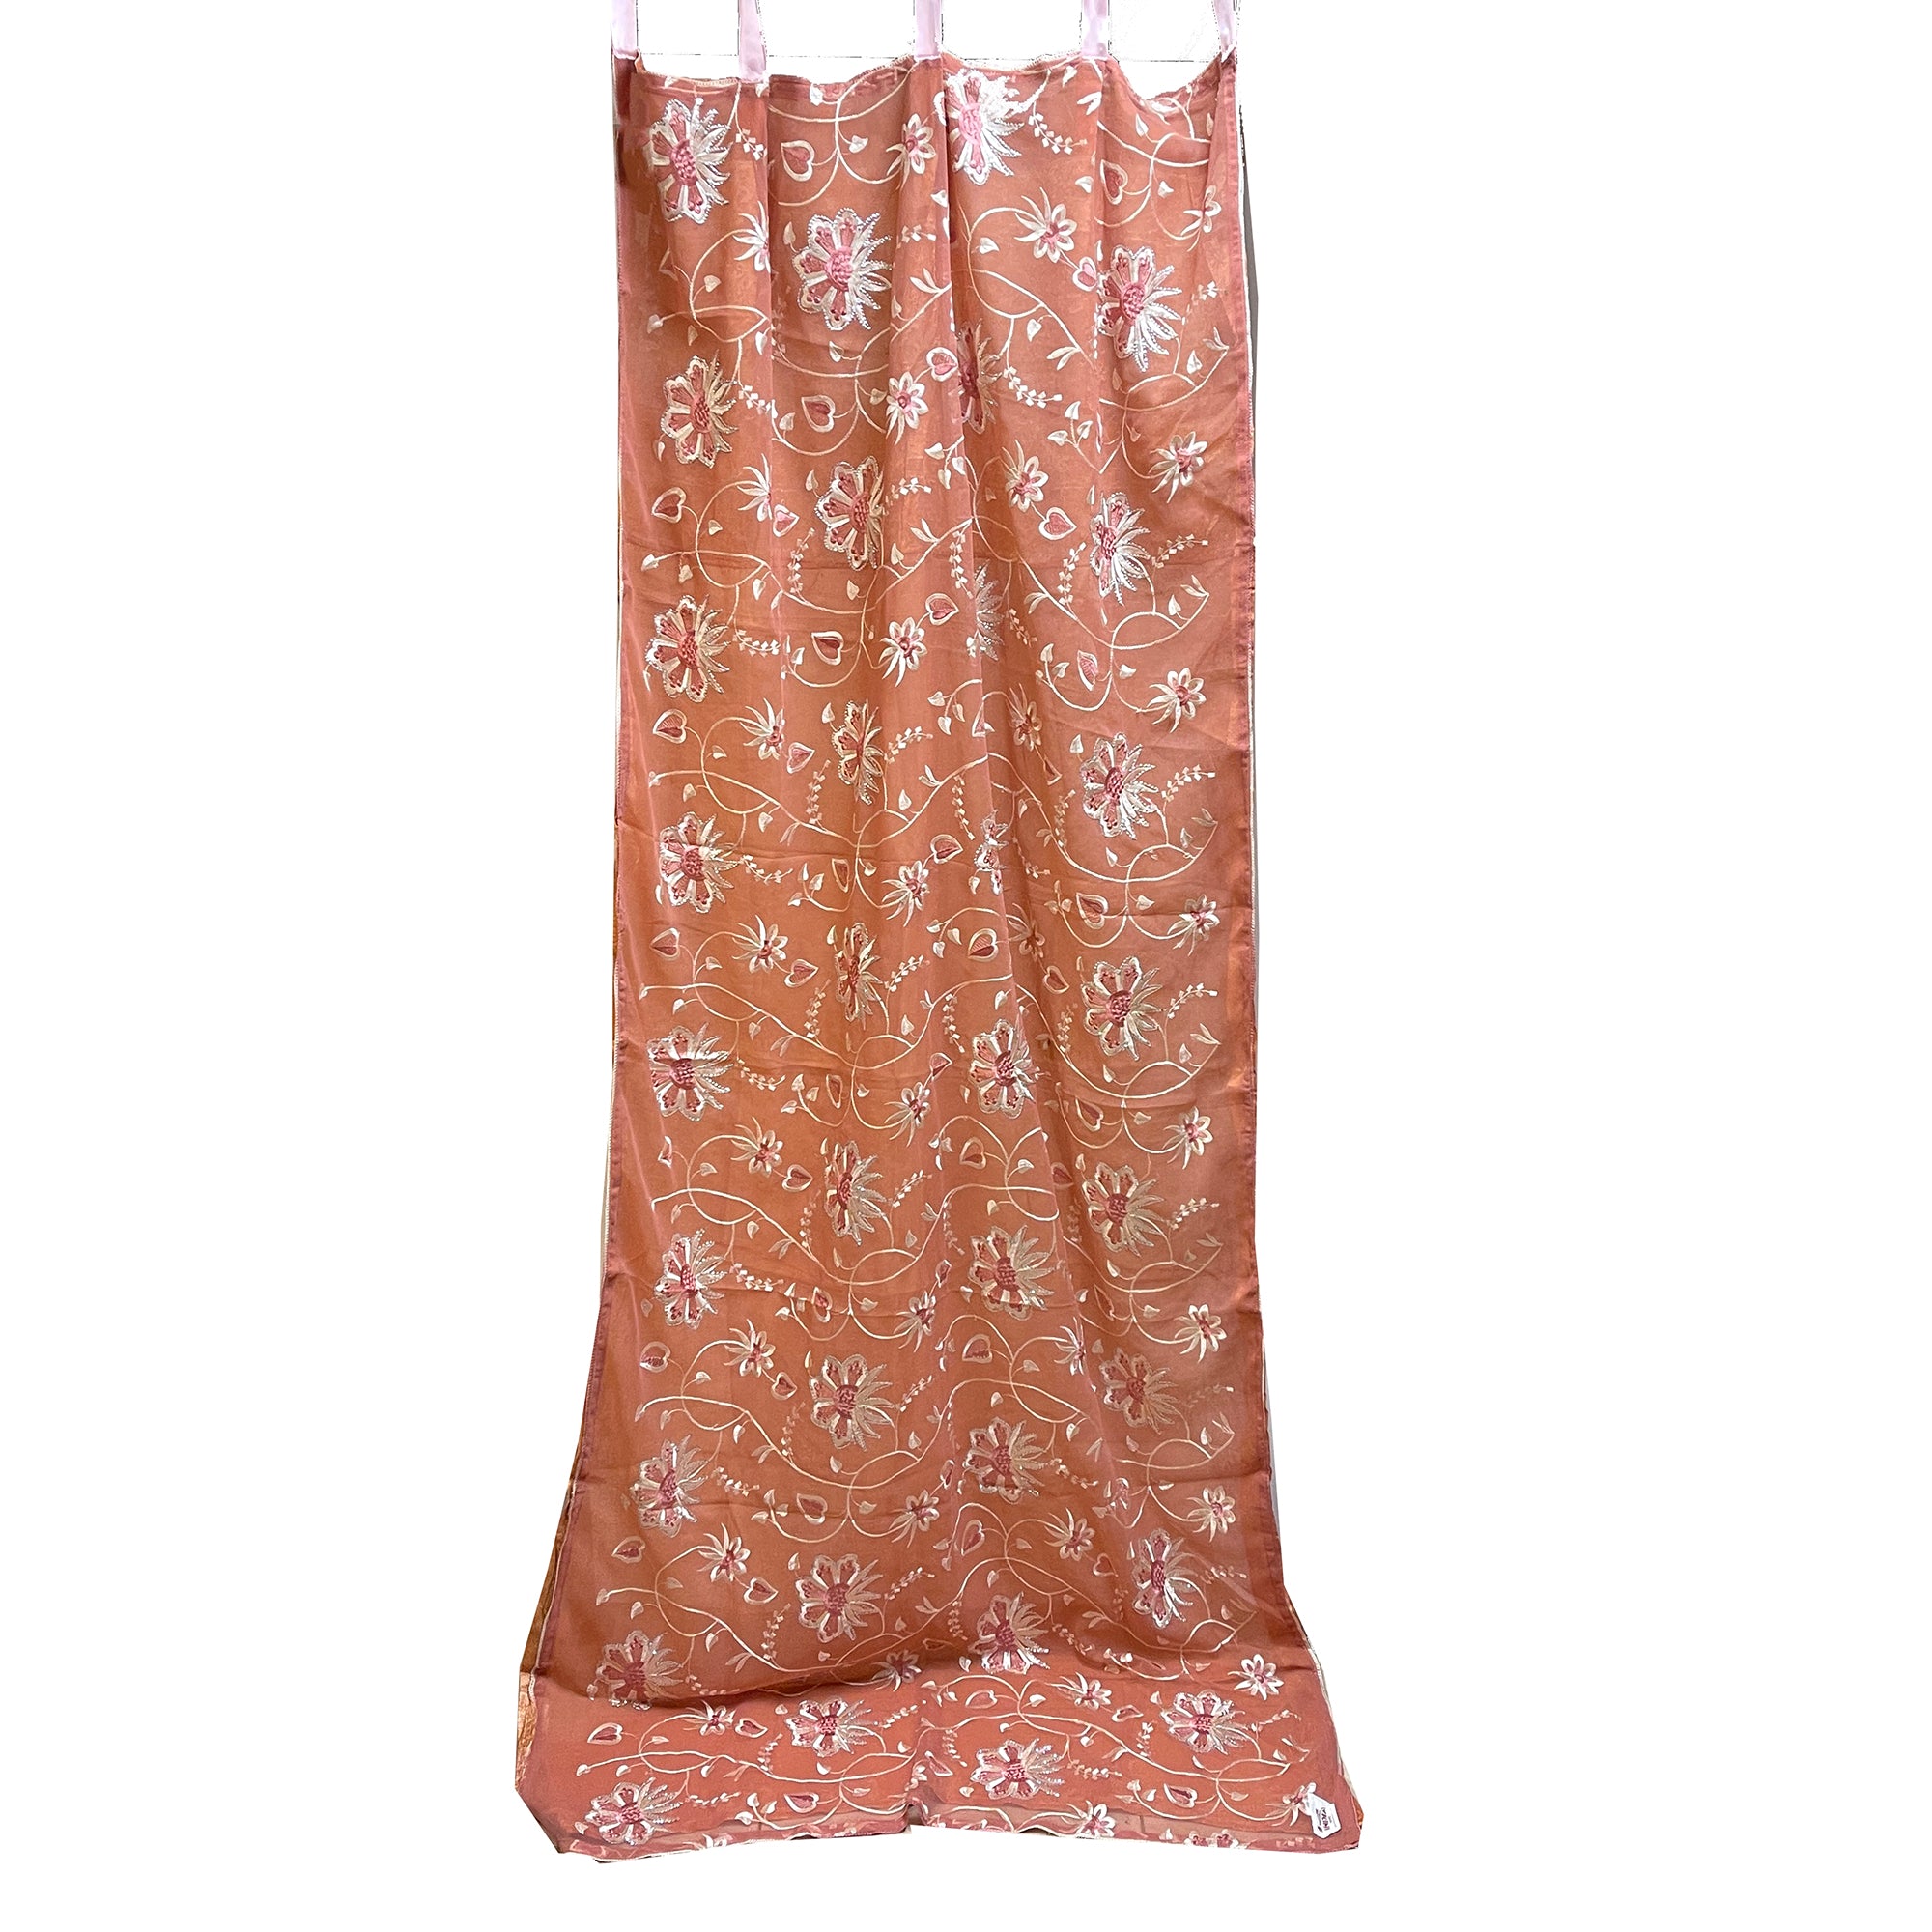 Single Orange Peach Curtains -7 Styles - Vintage India NYC